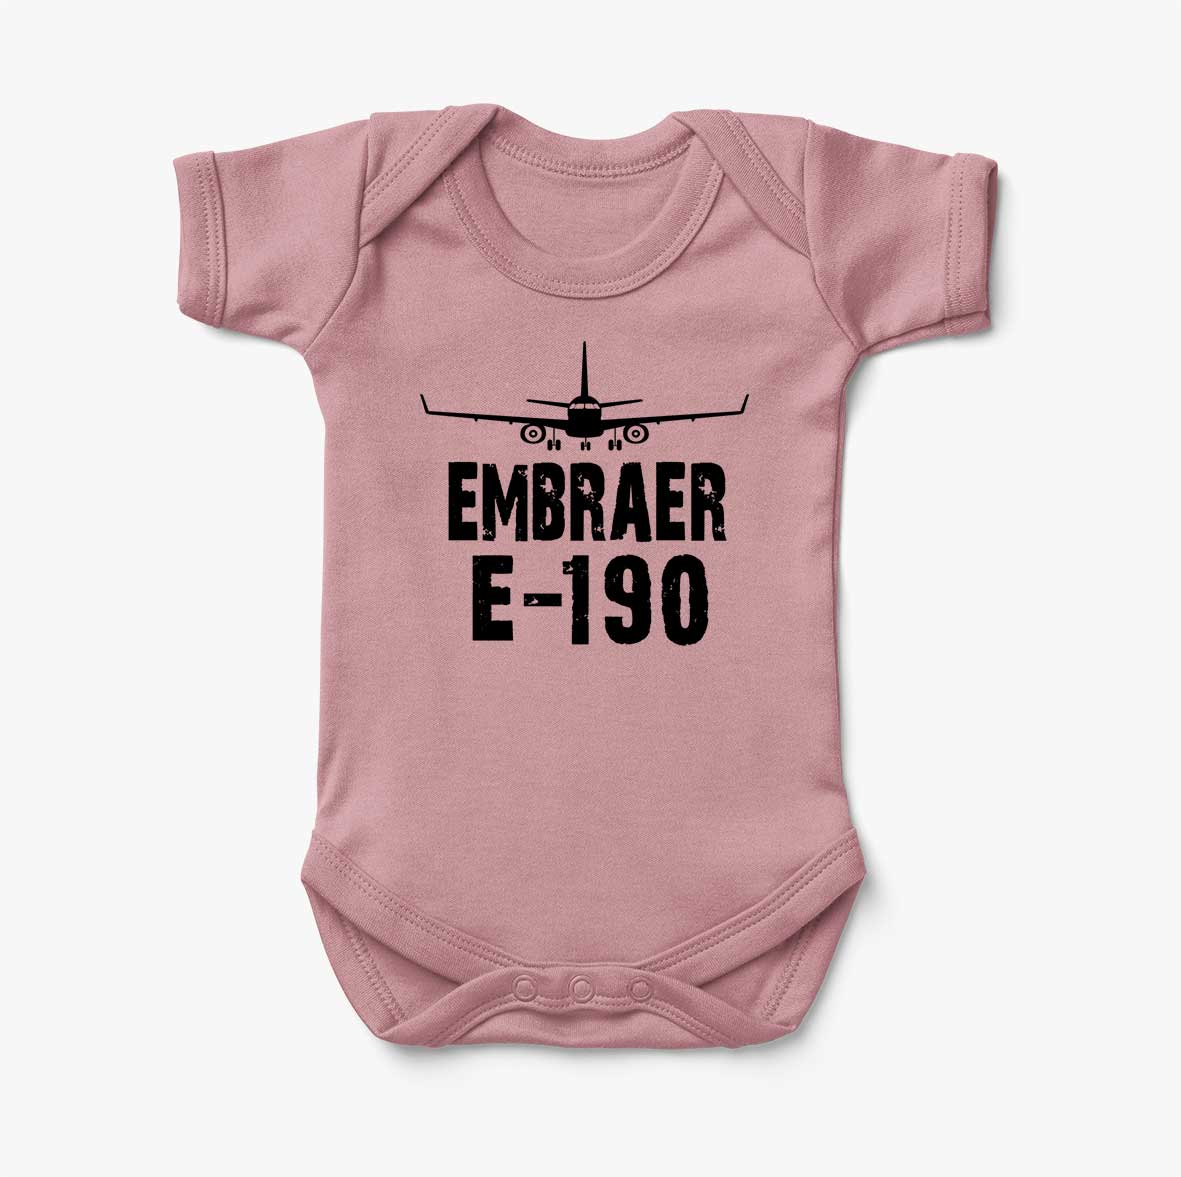 Embraer E-190 & Plane Designed Baby Bodysuits